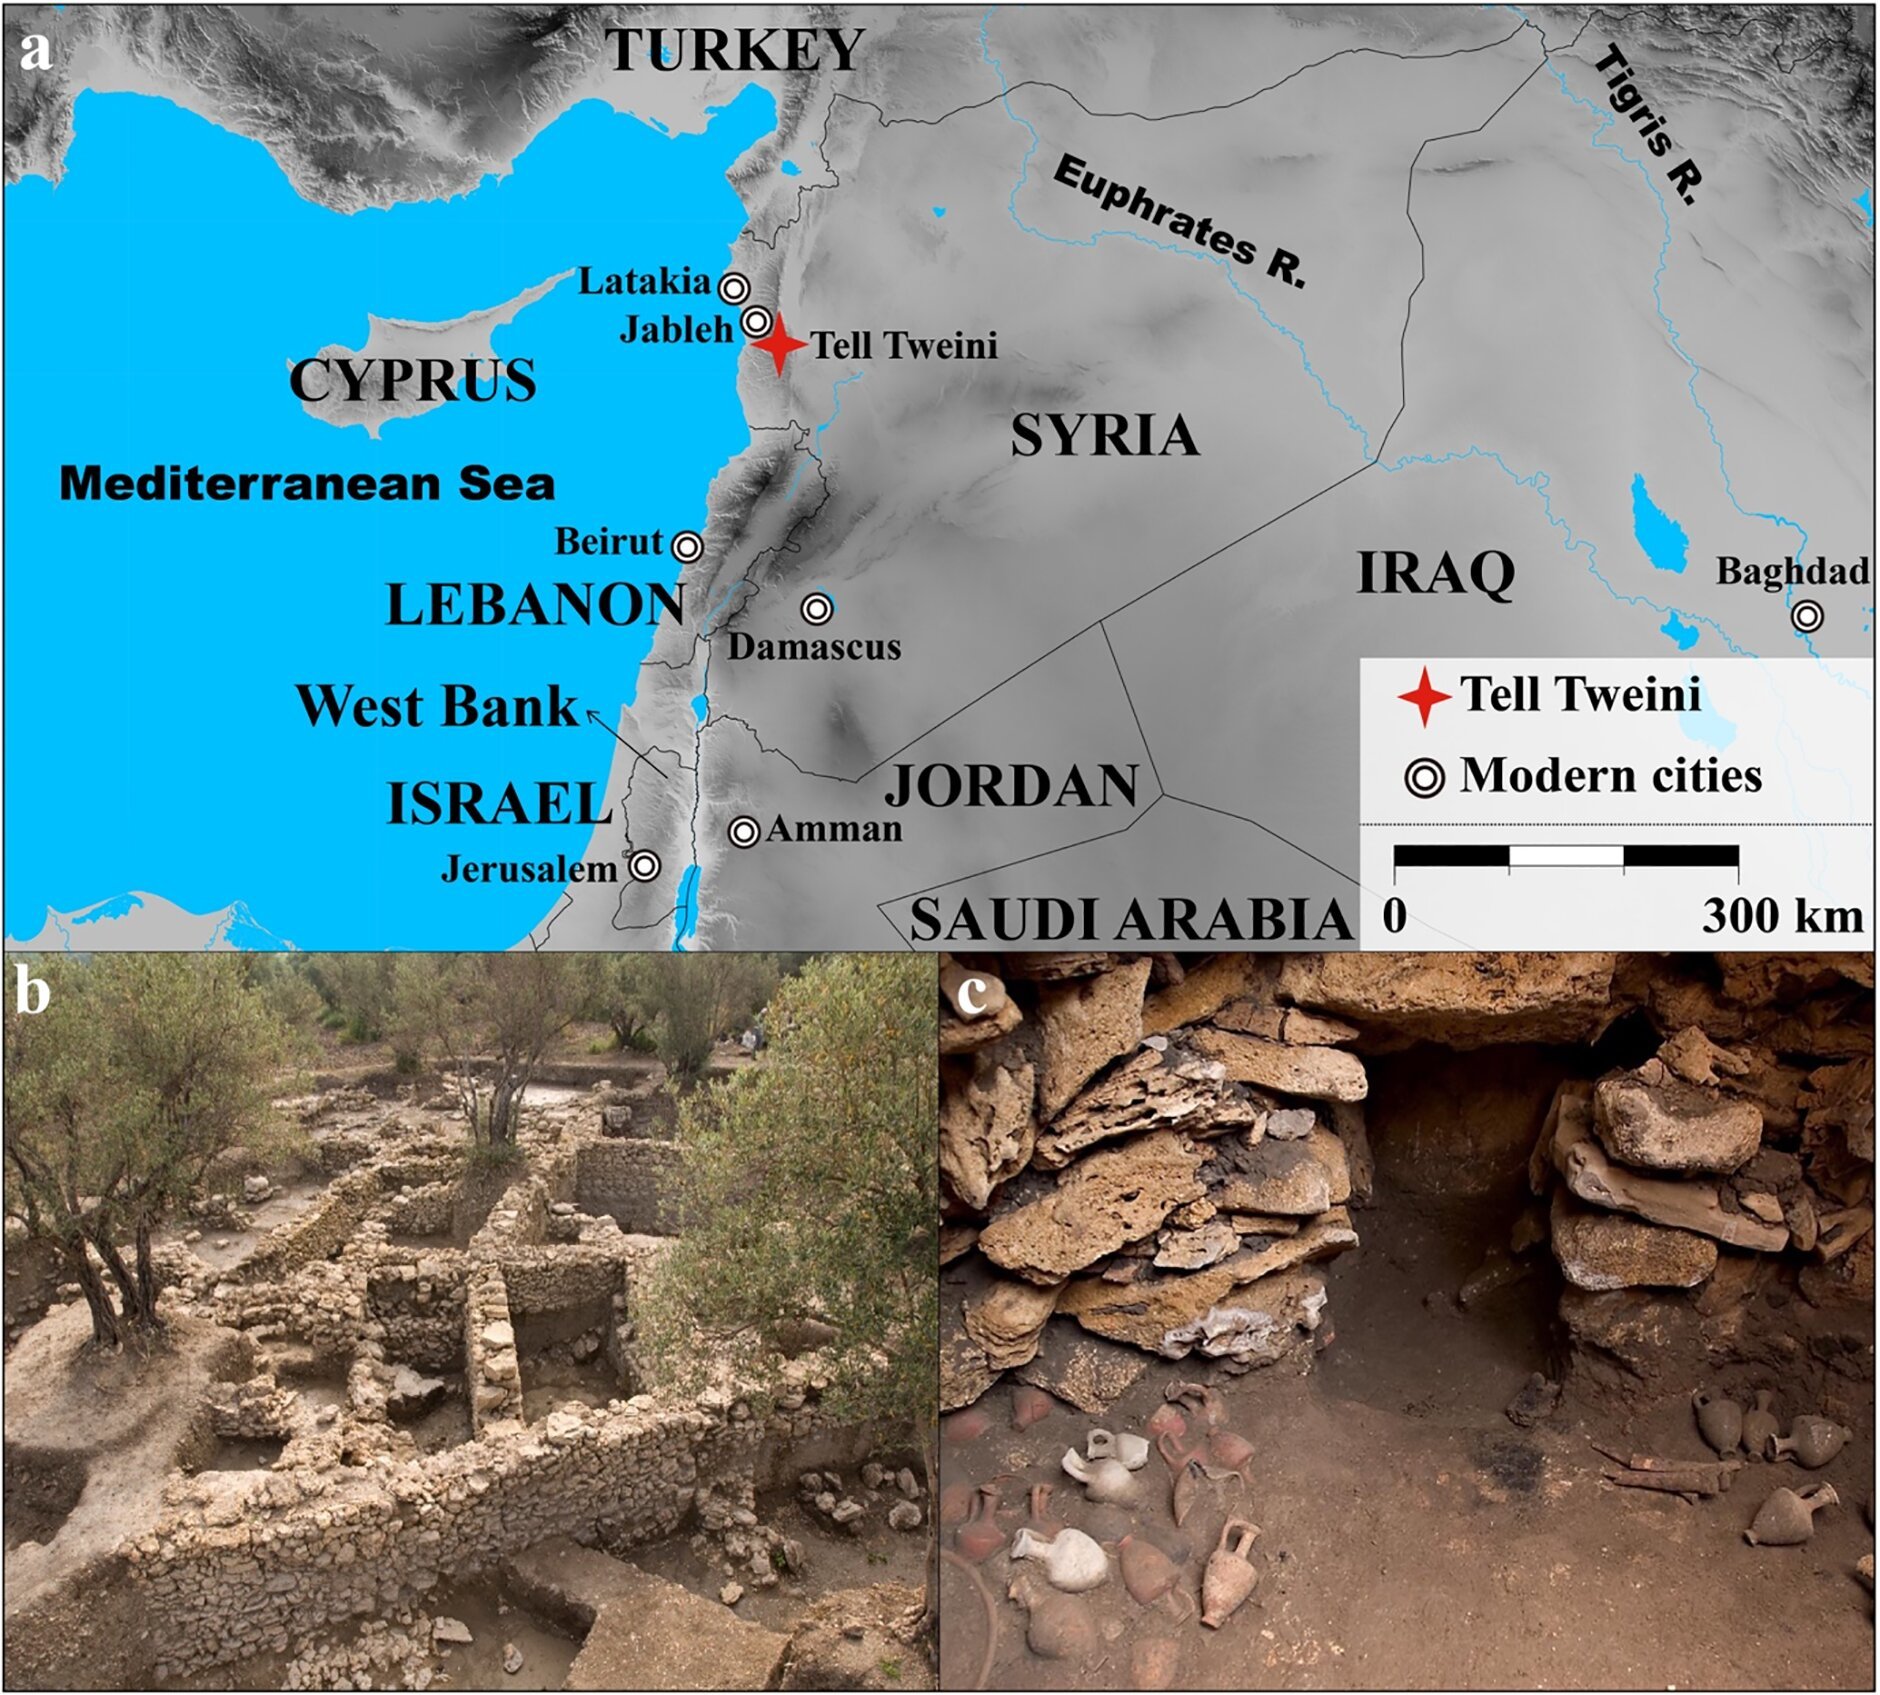 Analyses show ancient Syrian diets resembled the modern 'Mediterranean diet'